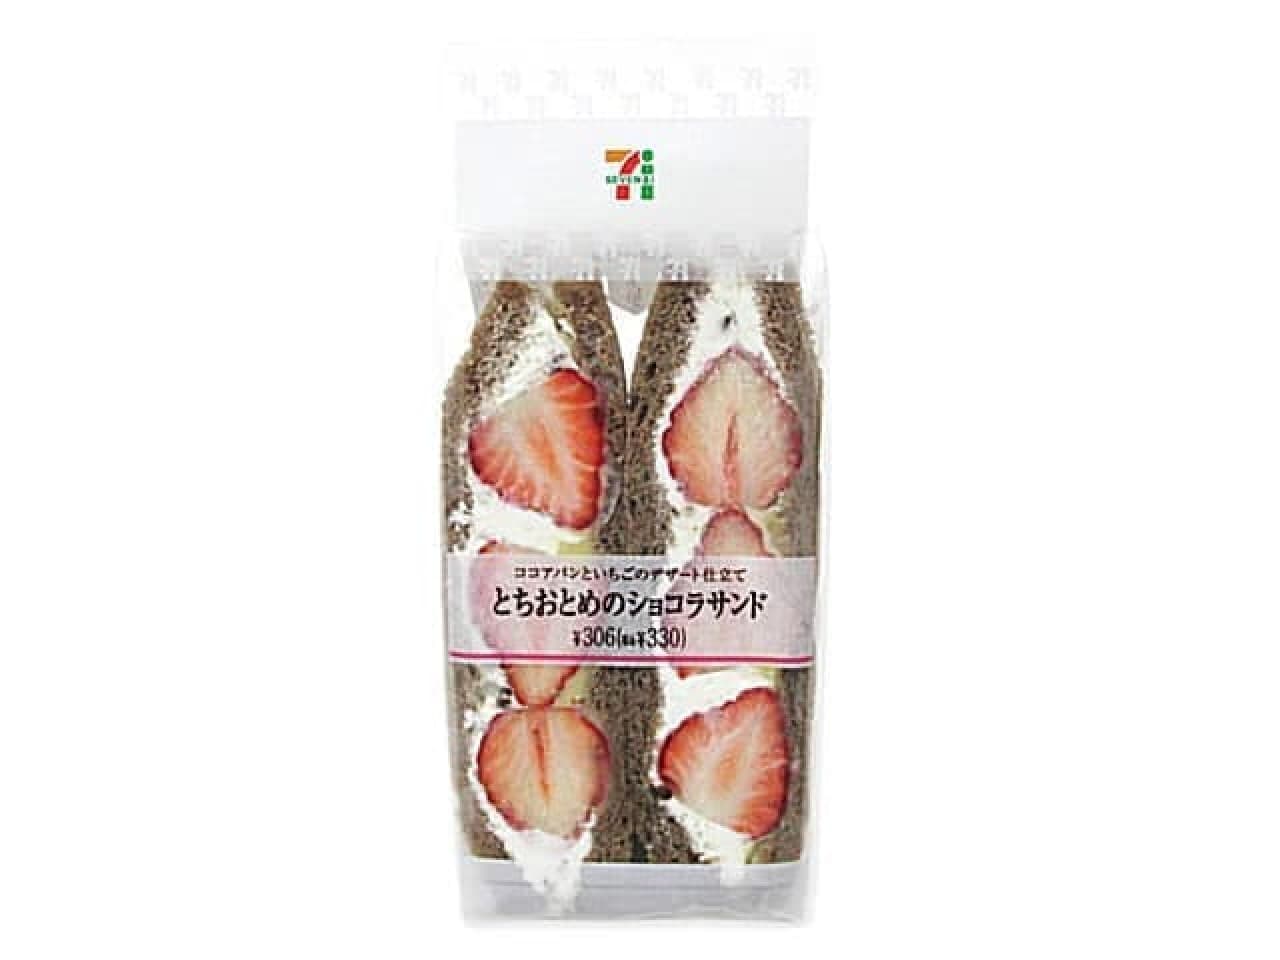 7-ELEVEN Tochiotome Chocolat Sandwich